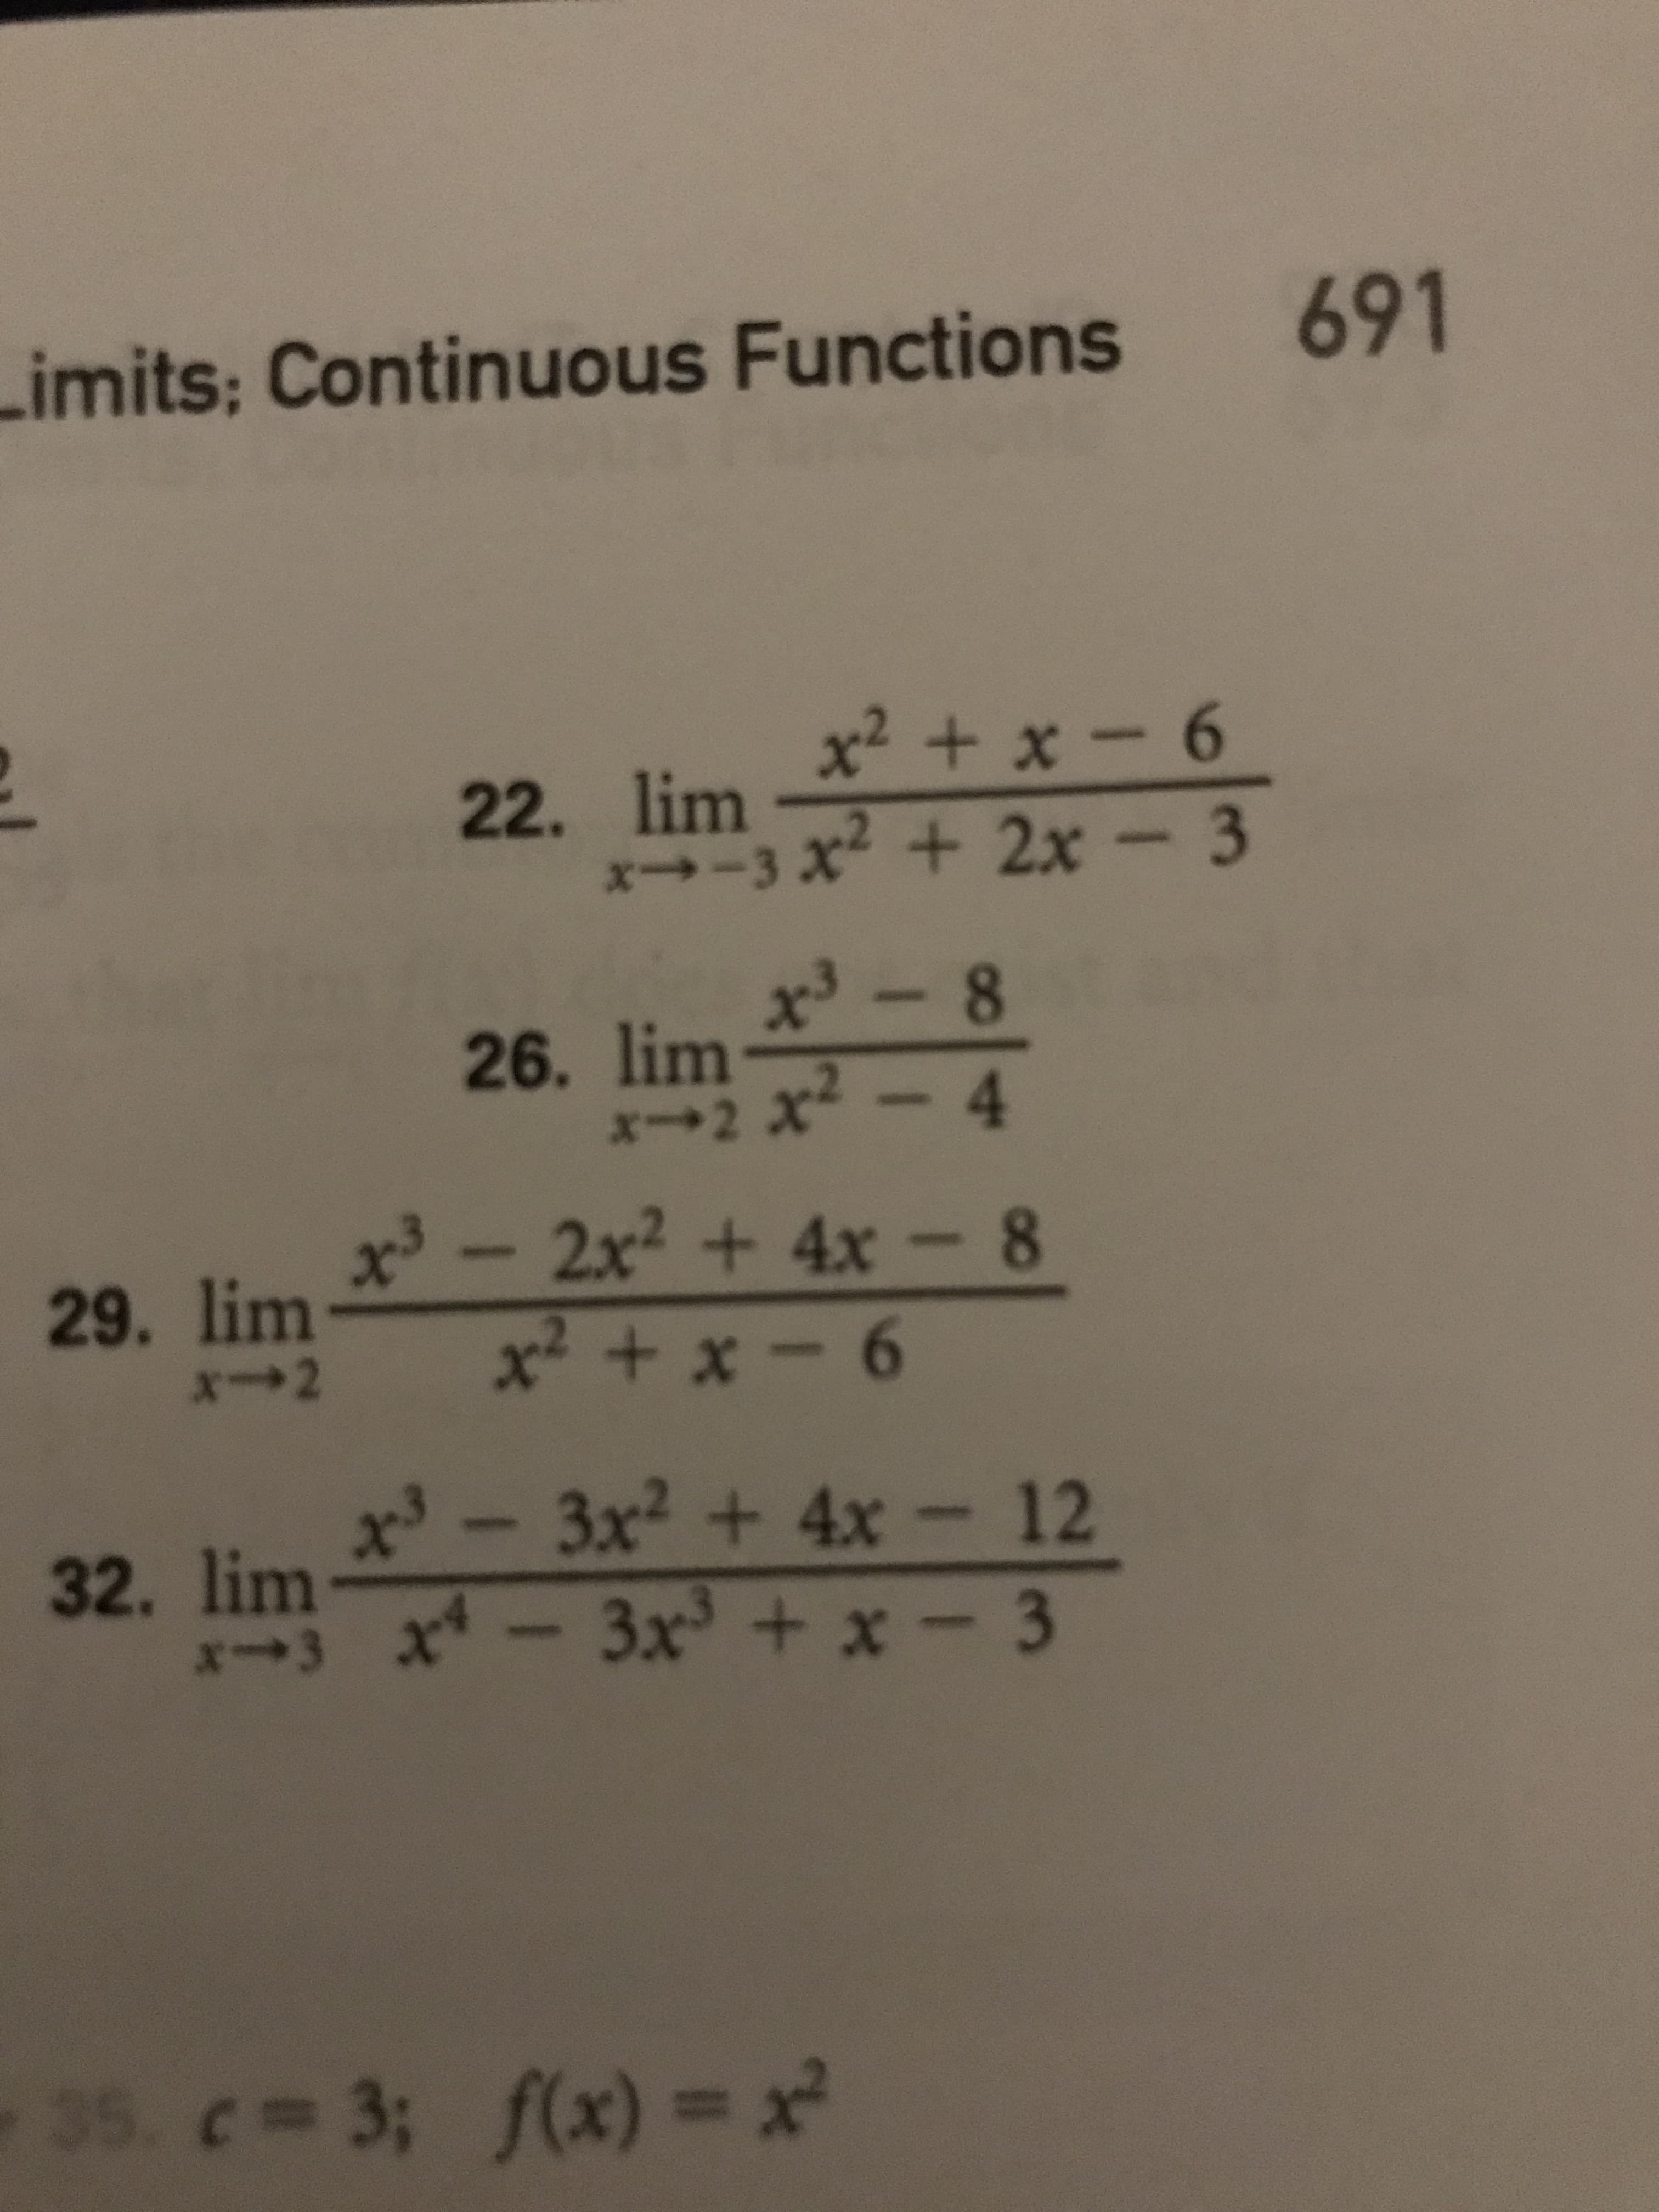 691
imits: Continuous Functions
x2 +x-6
22. lim
x-3 x + 2x - 3
x3- 8
26. lim
- 4
x-2
x3
2x2+4x- 8
29. lim
x2 +x-6
*2
x3-3x2 + 4x- 12
x4-3x3 + x - 3
32. lim
3
35. c= 3; f(x) =
